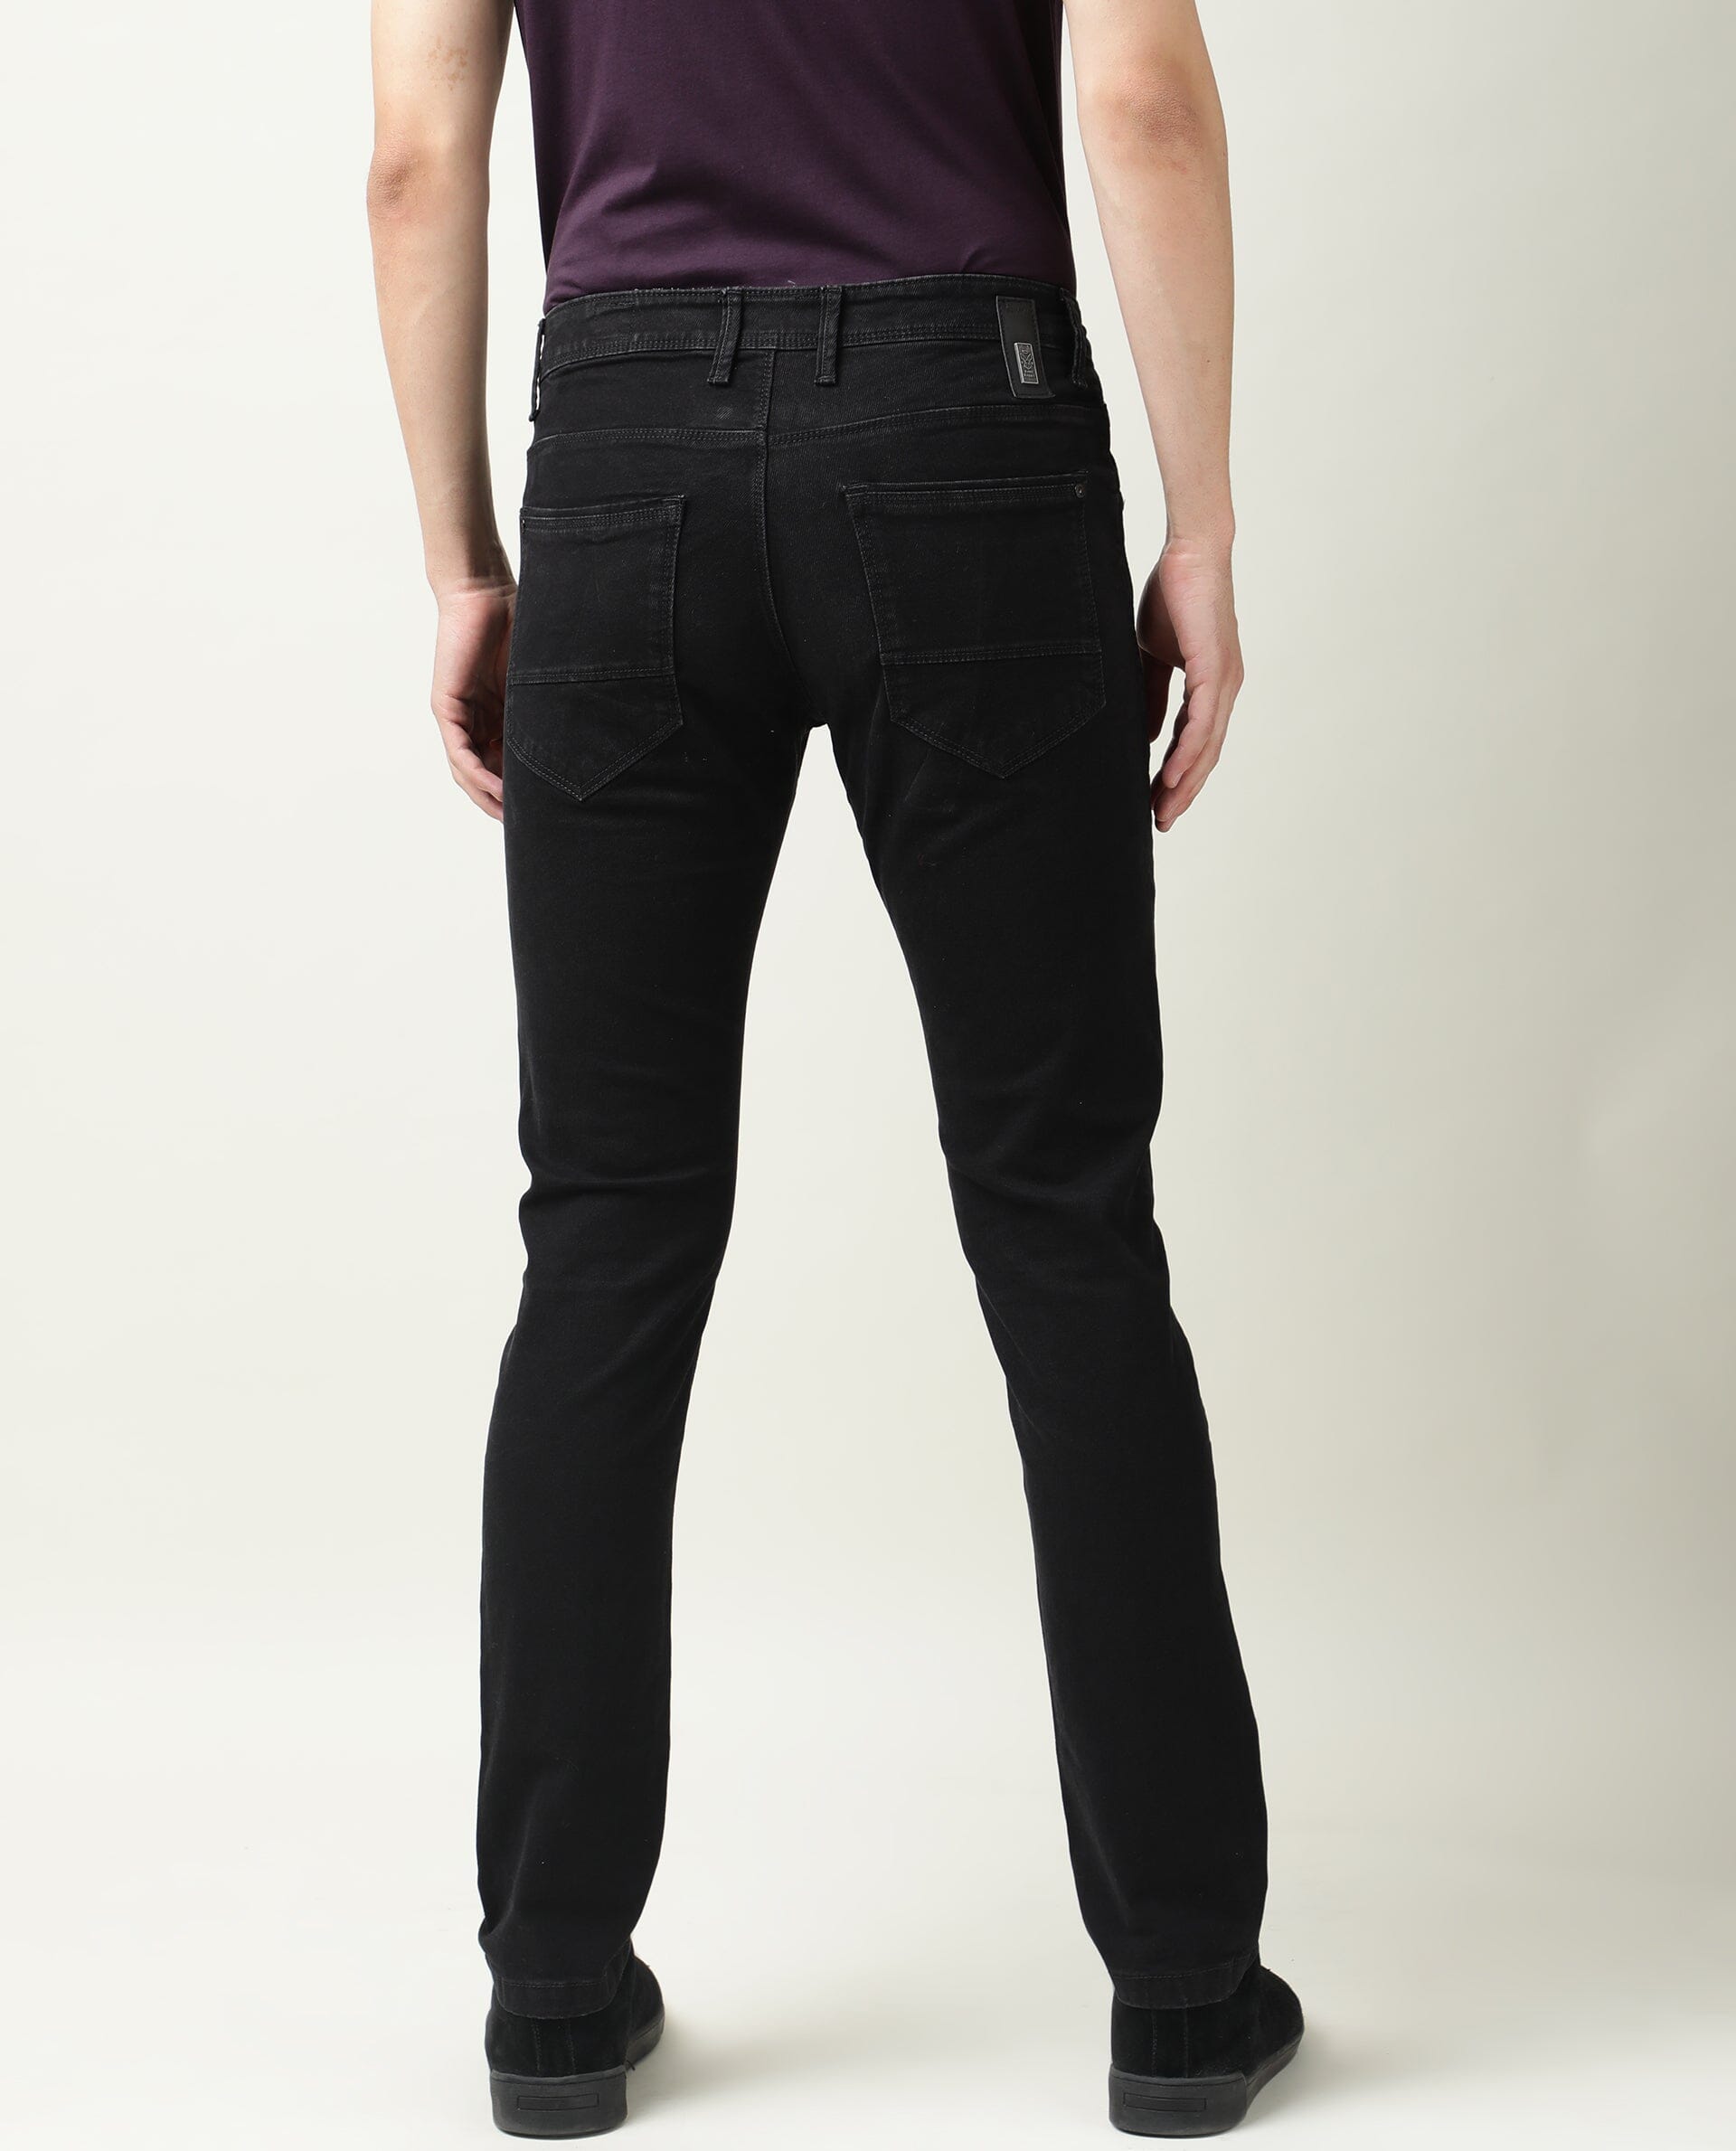 Buy Black Jeans for Men by DNMX Online  Ajiocom